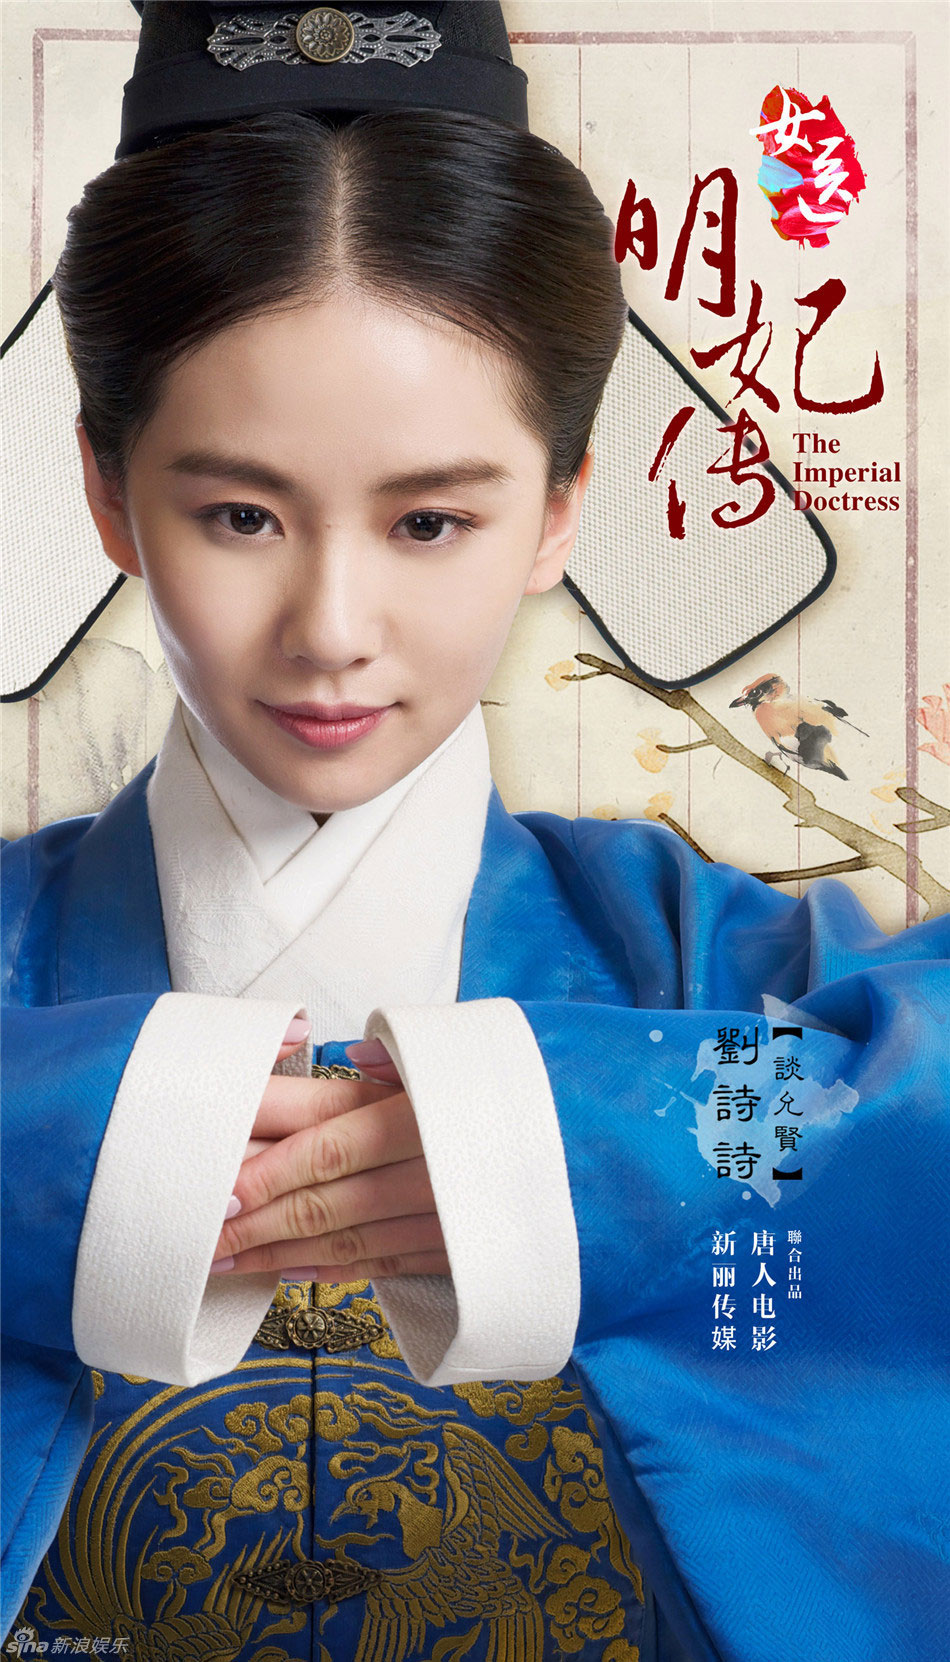 Liu Shishi Imperial Doctress Chinese drama